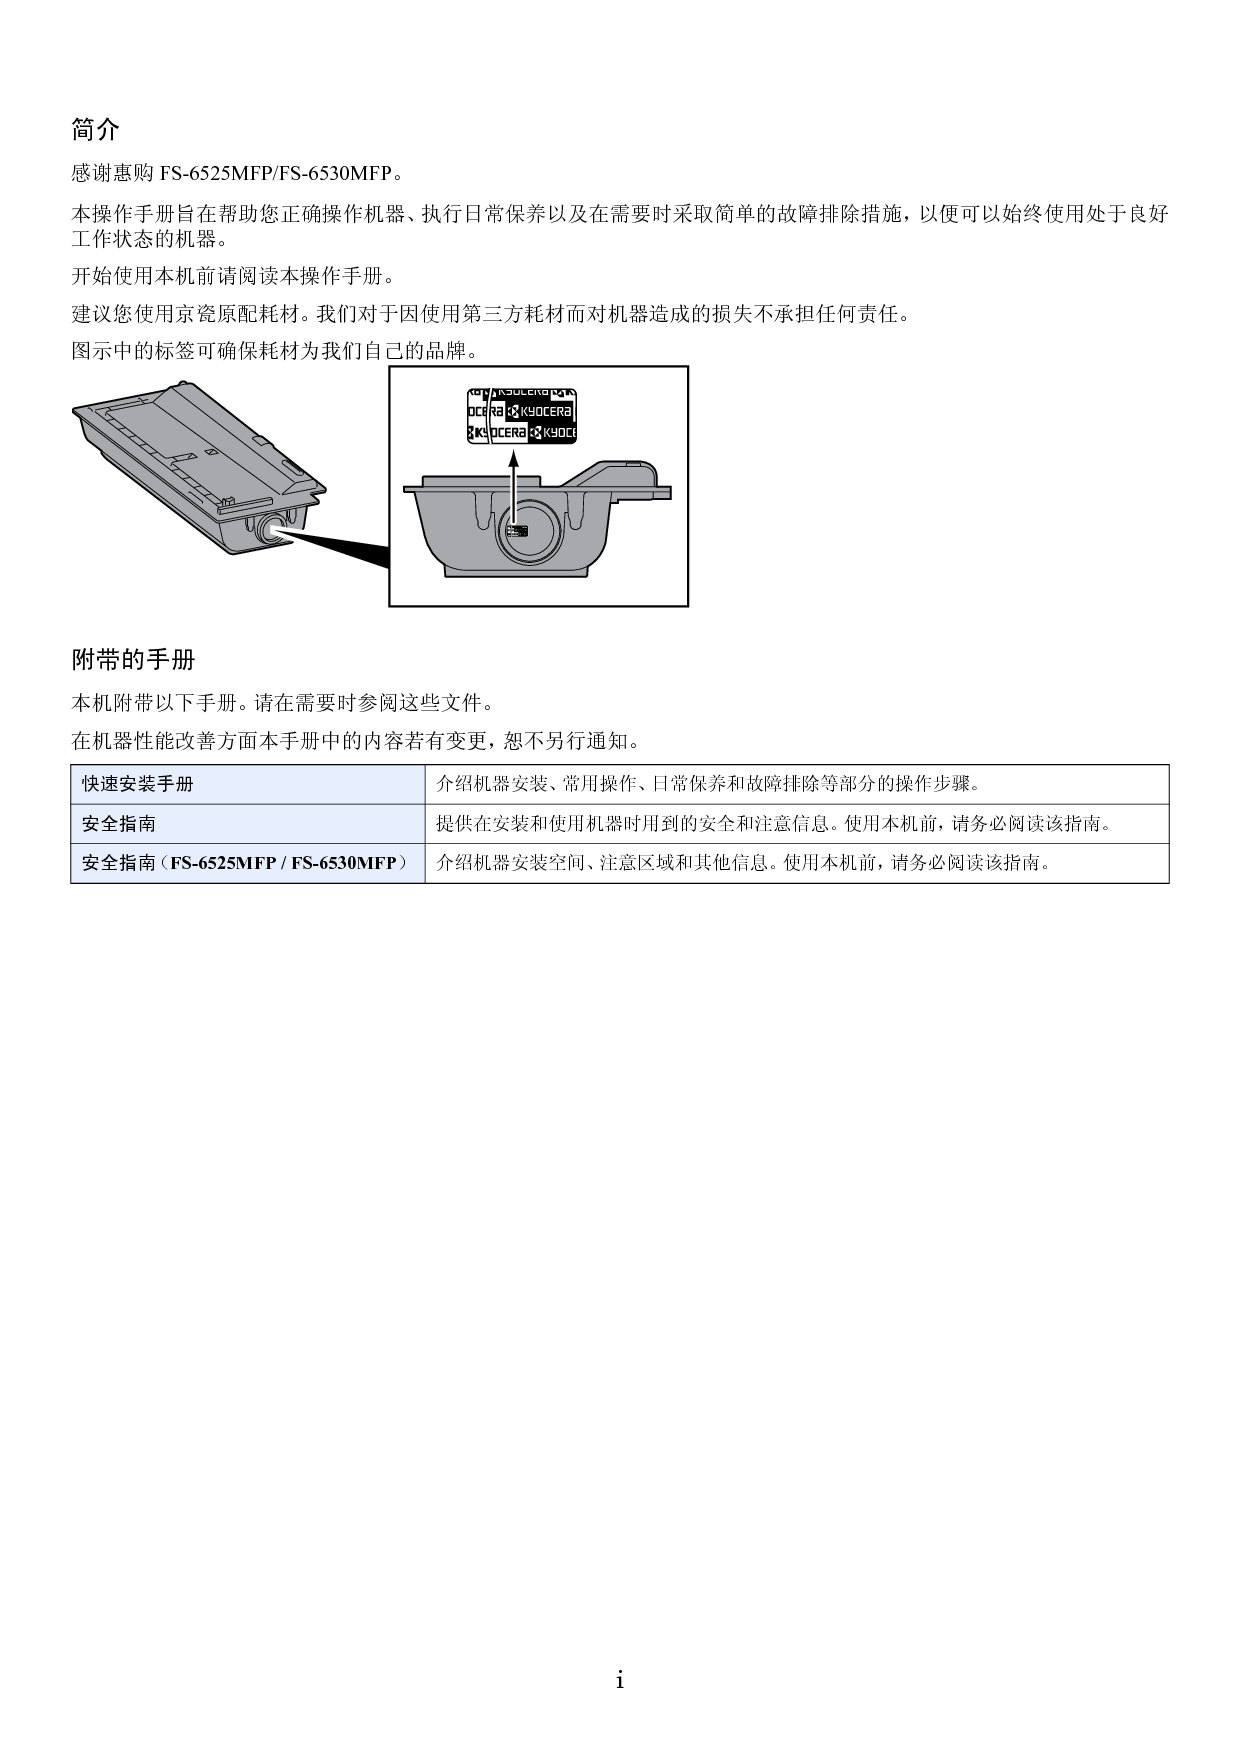 京瓷 Kyocera FS-6525MFP 操作手册 第1页